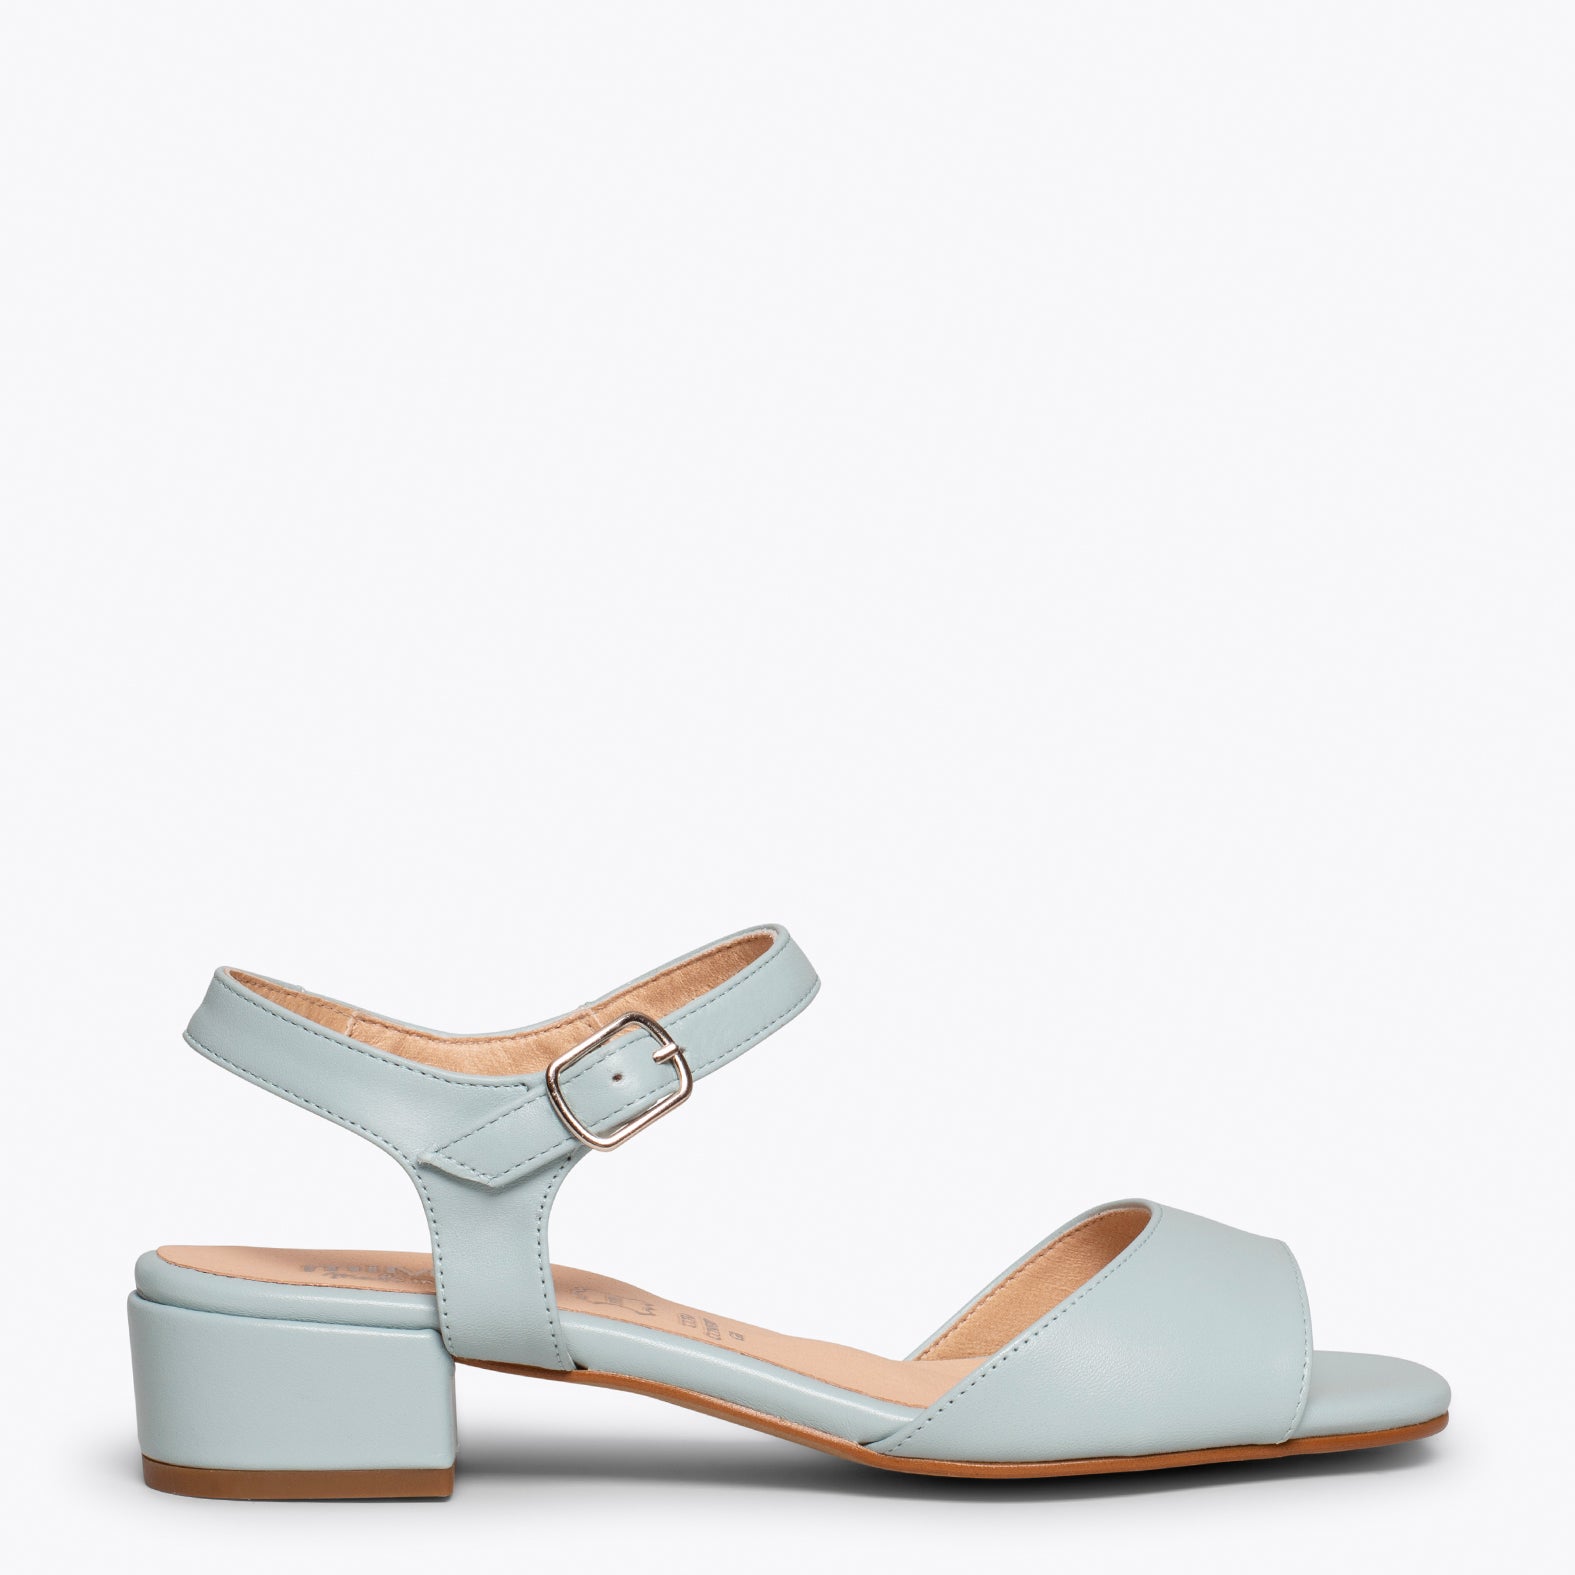 SEA – LIGHT BLUE low heel sandal